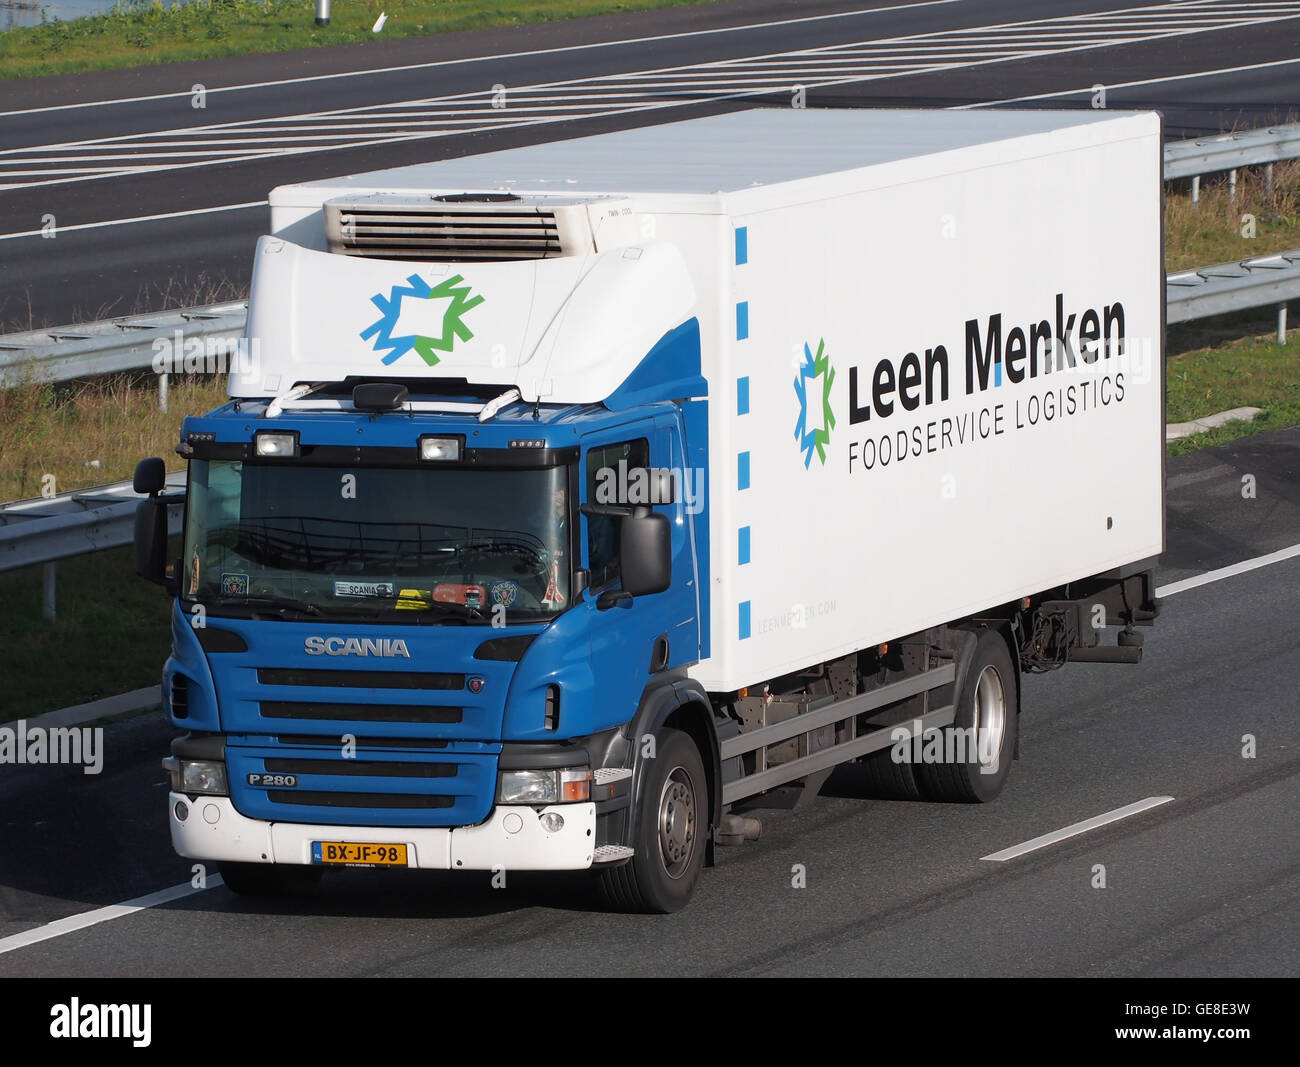 Scania P 280, Leen Menken, Foodservice Logistics Stock Photo